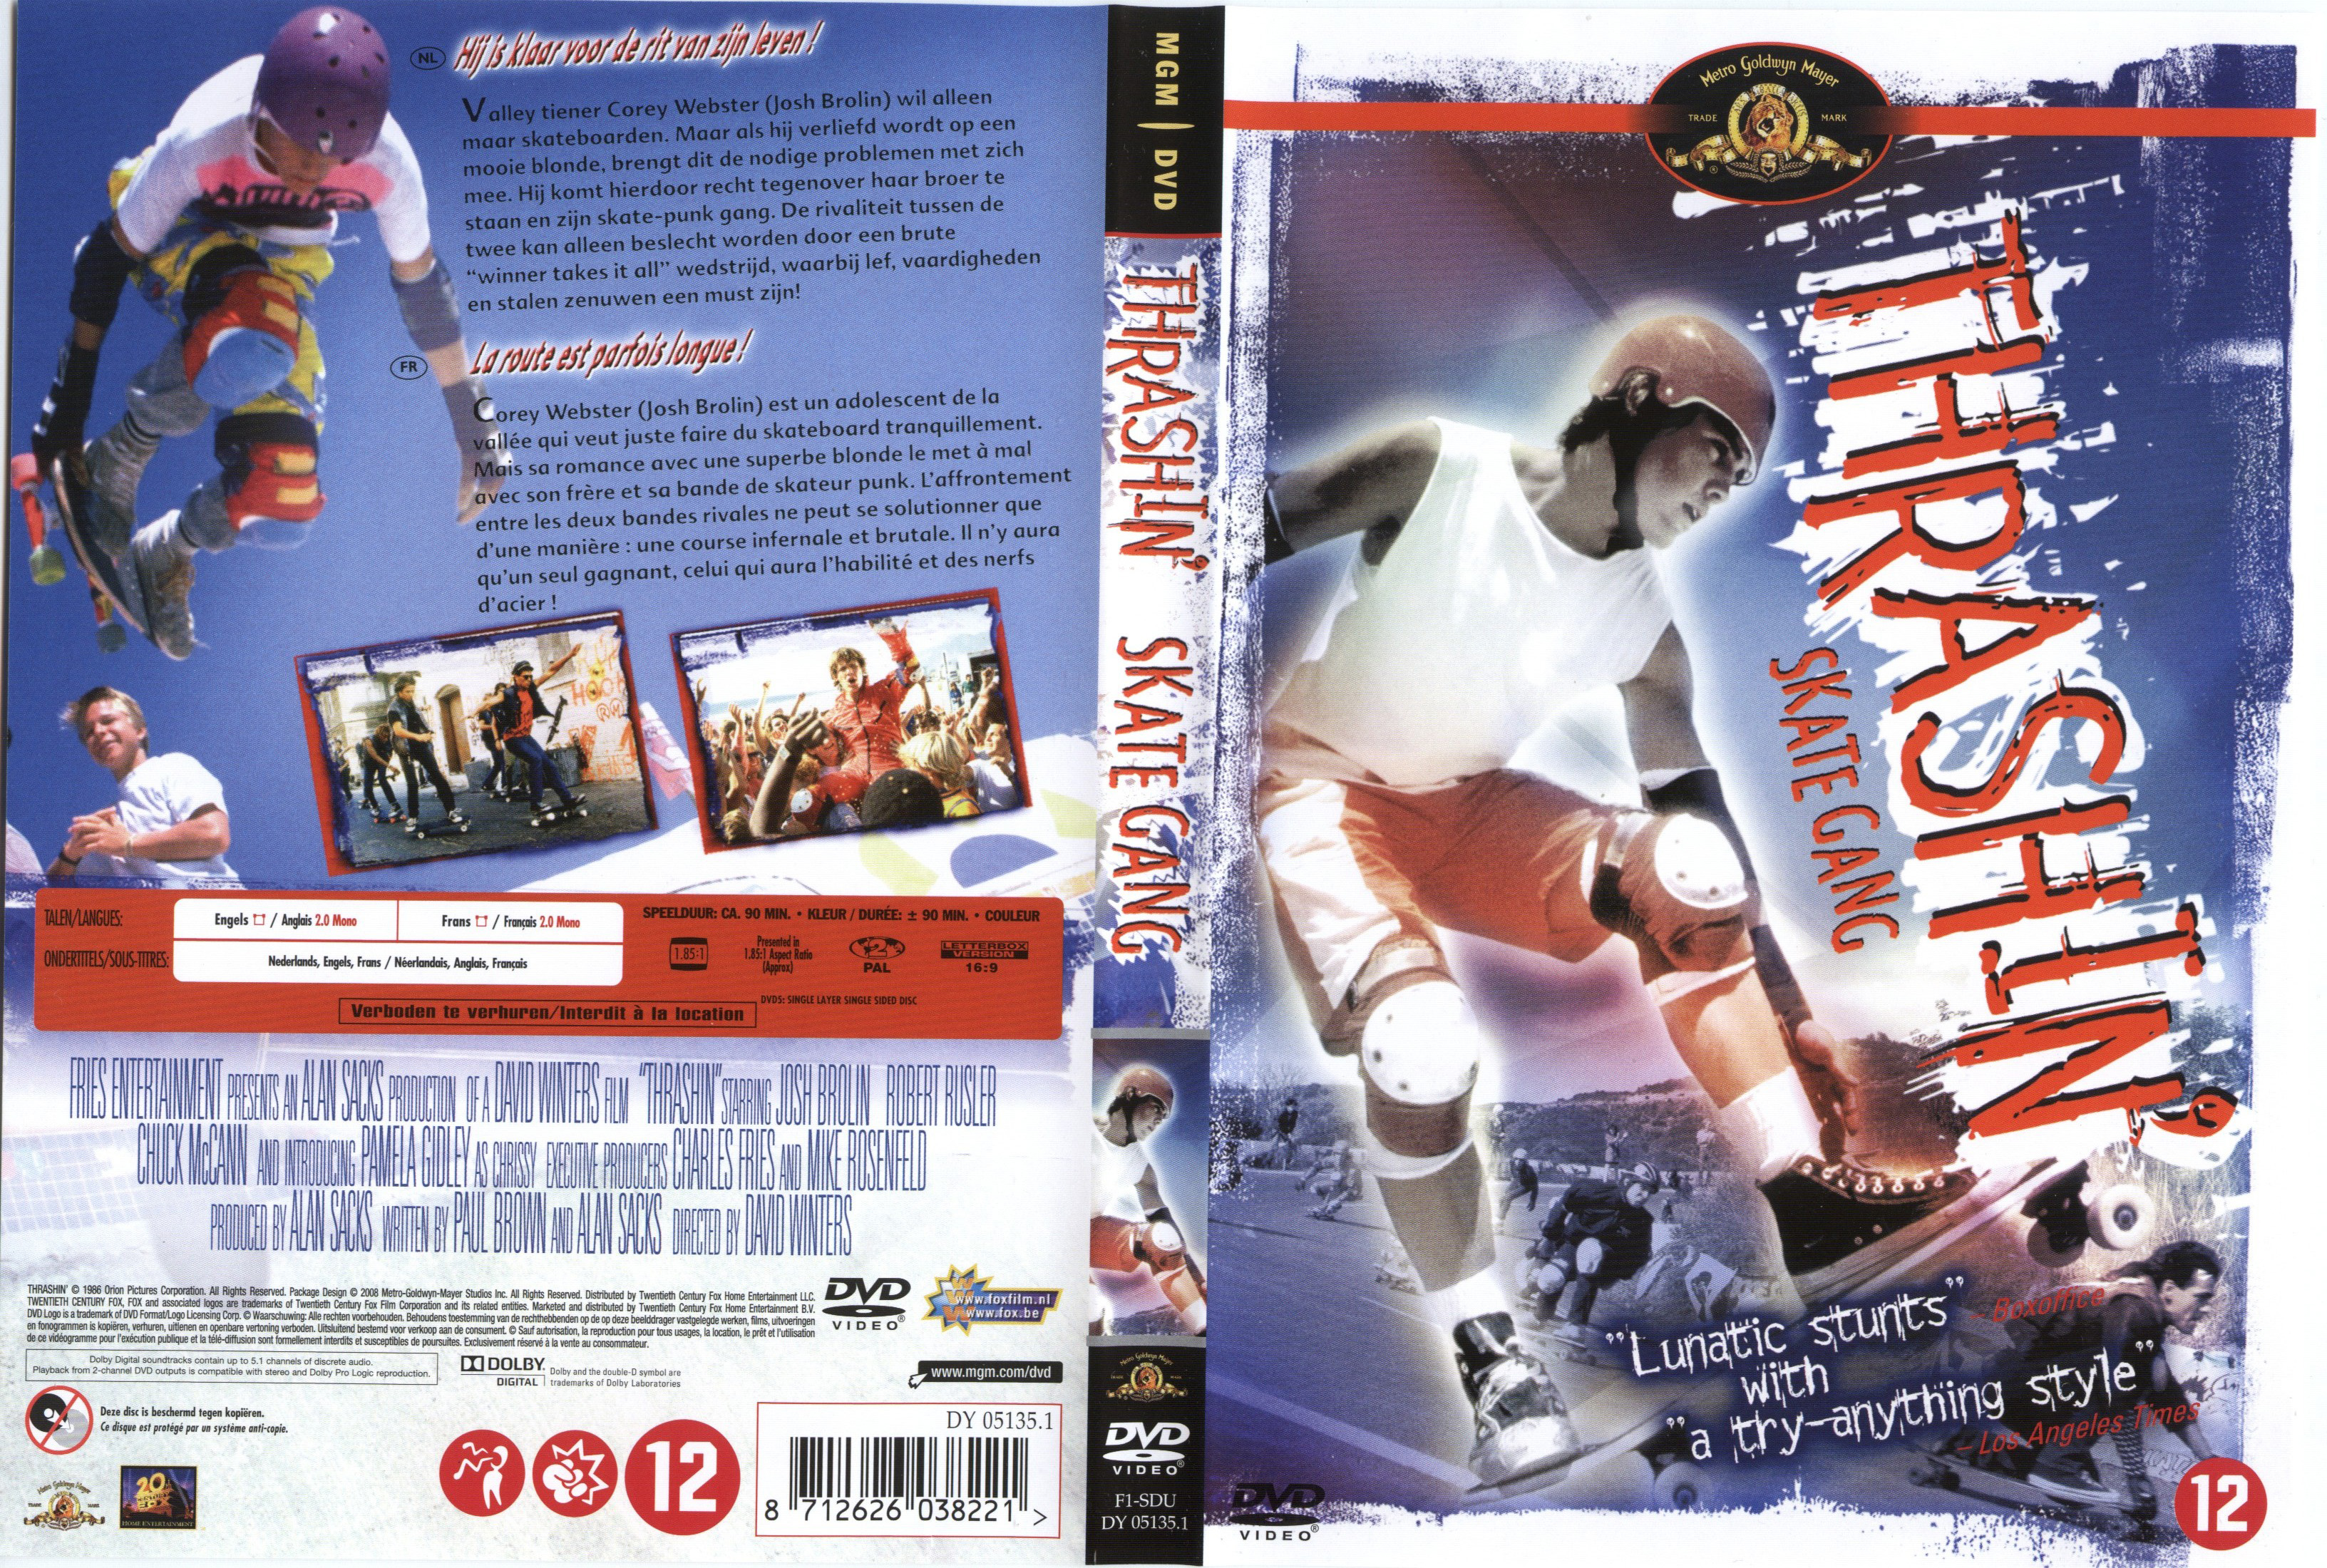 Jaquette DVD Trashin